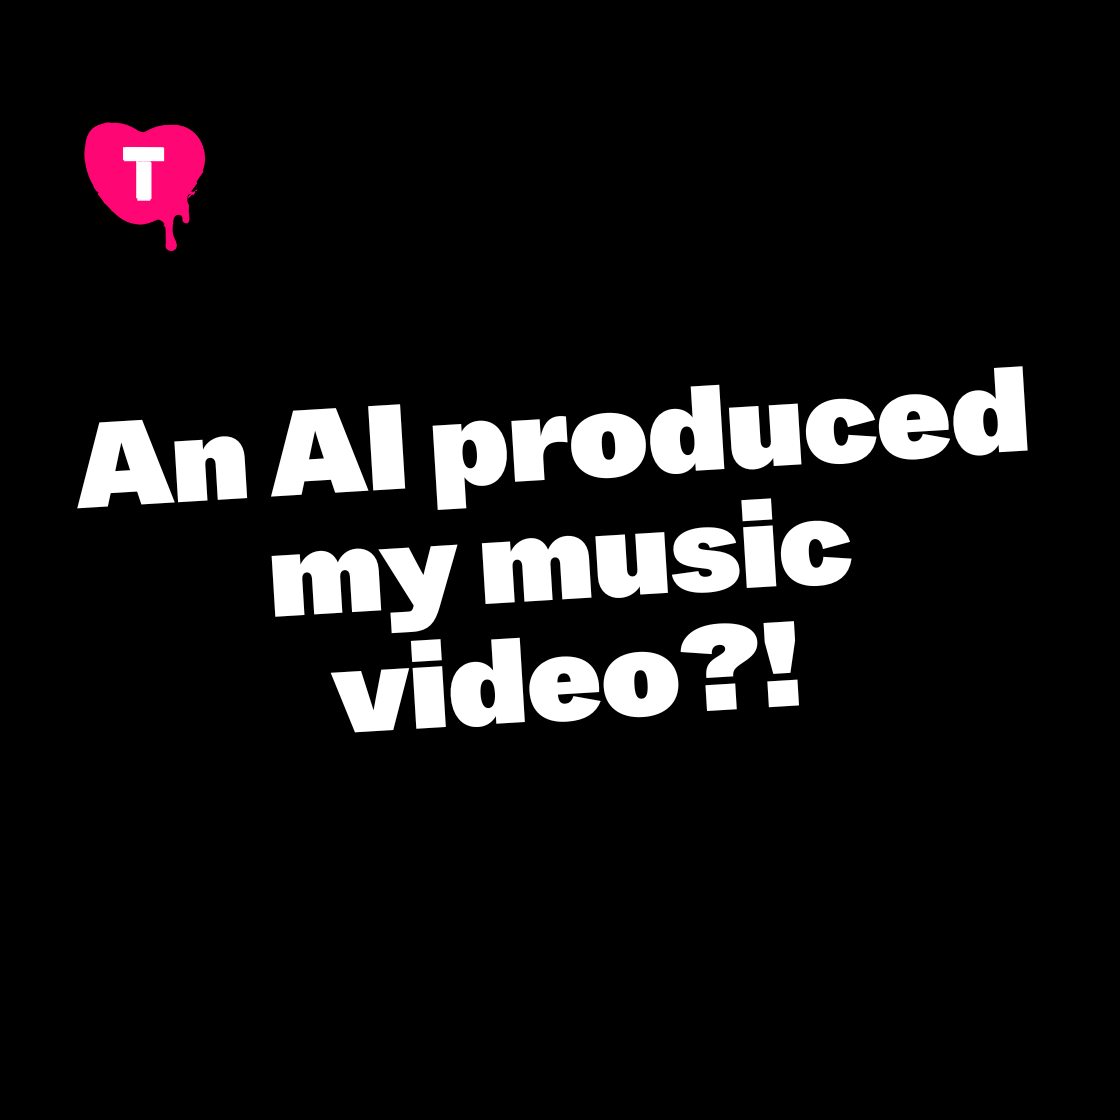 An AI produced my music video?!